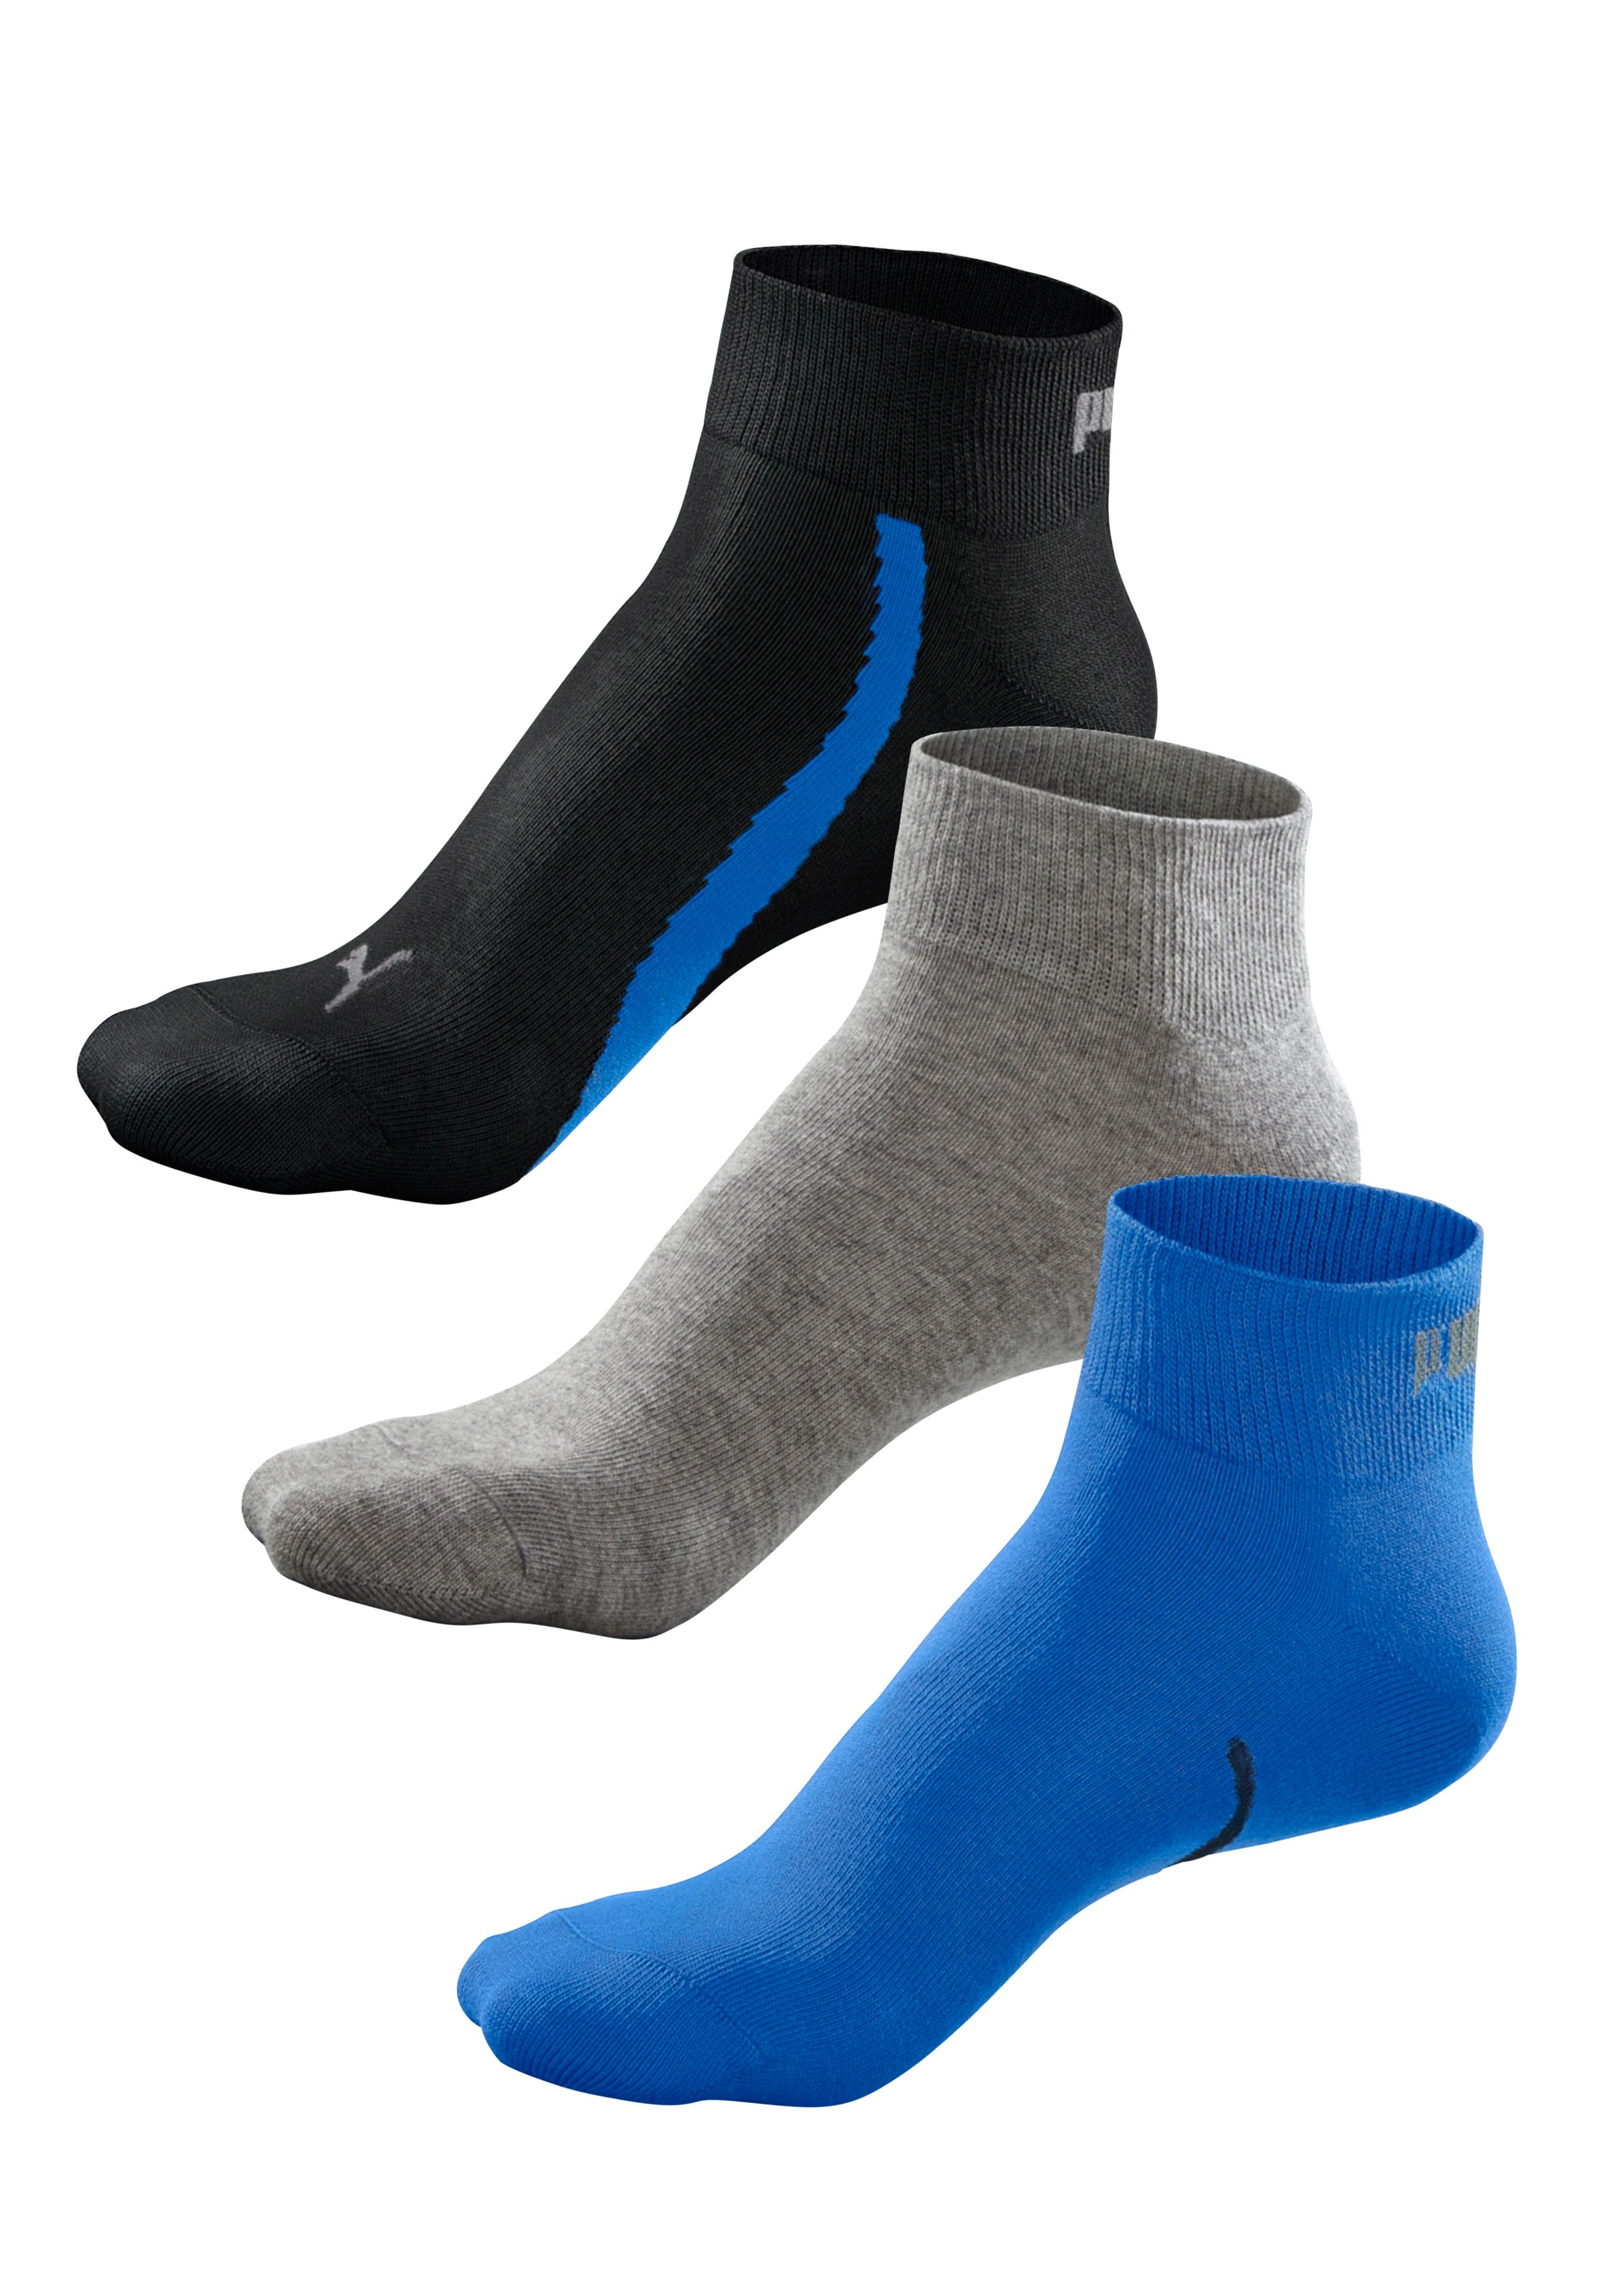 Puma Lifestyle Quarter Socken 3 Paare EU 35-38 Navy / Grey / Strong Blue günstig online kaufen